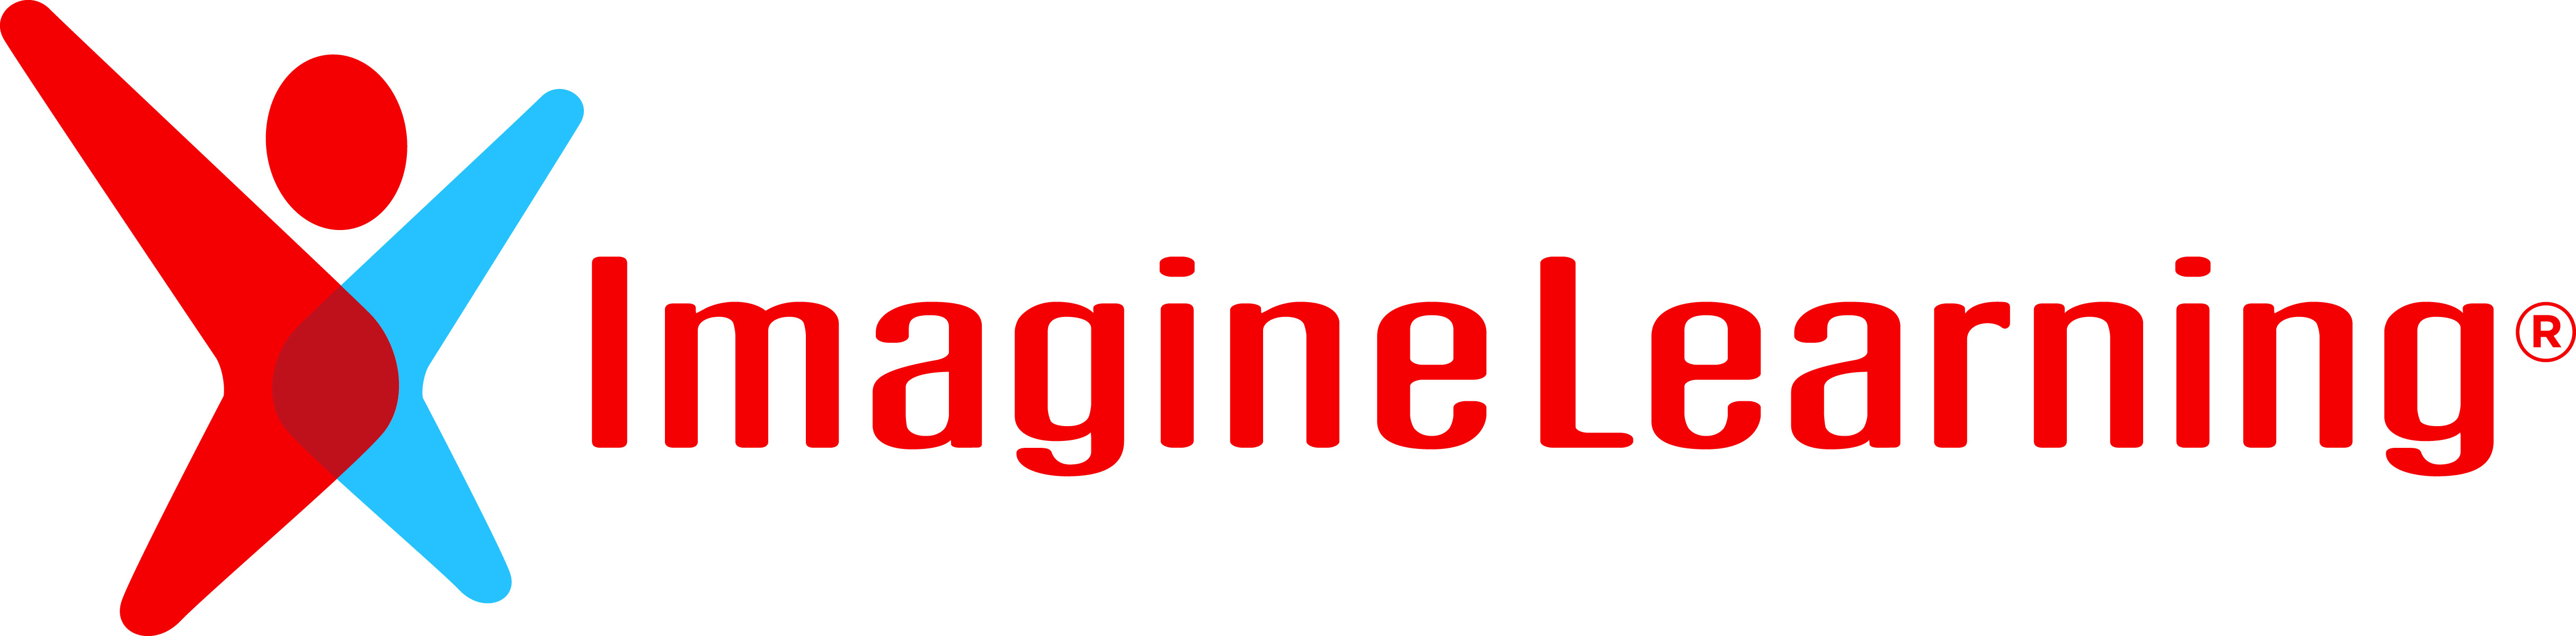 Imagine Learning logo__CMYK very large_R